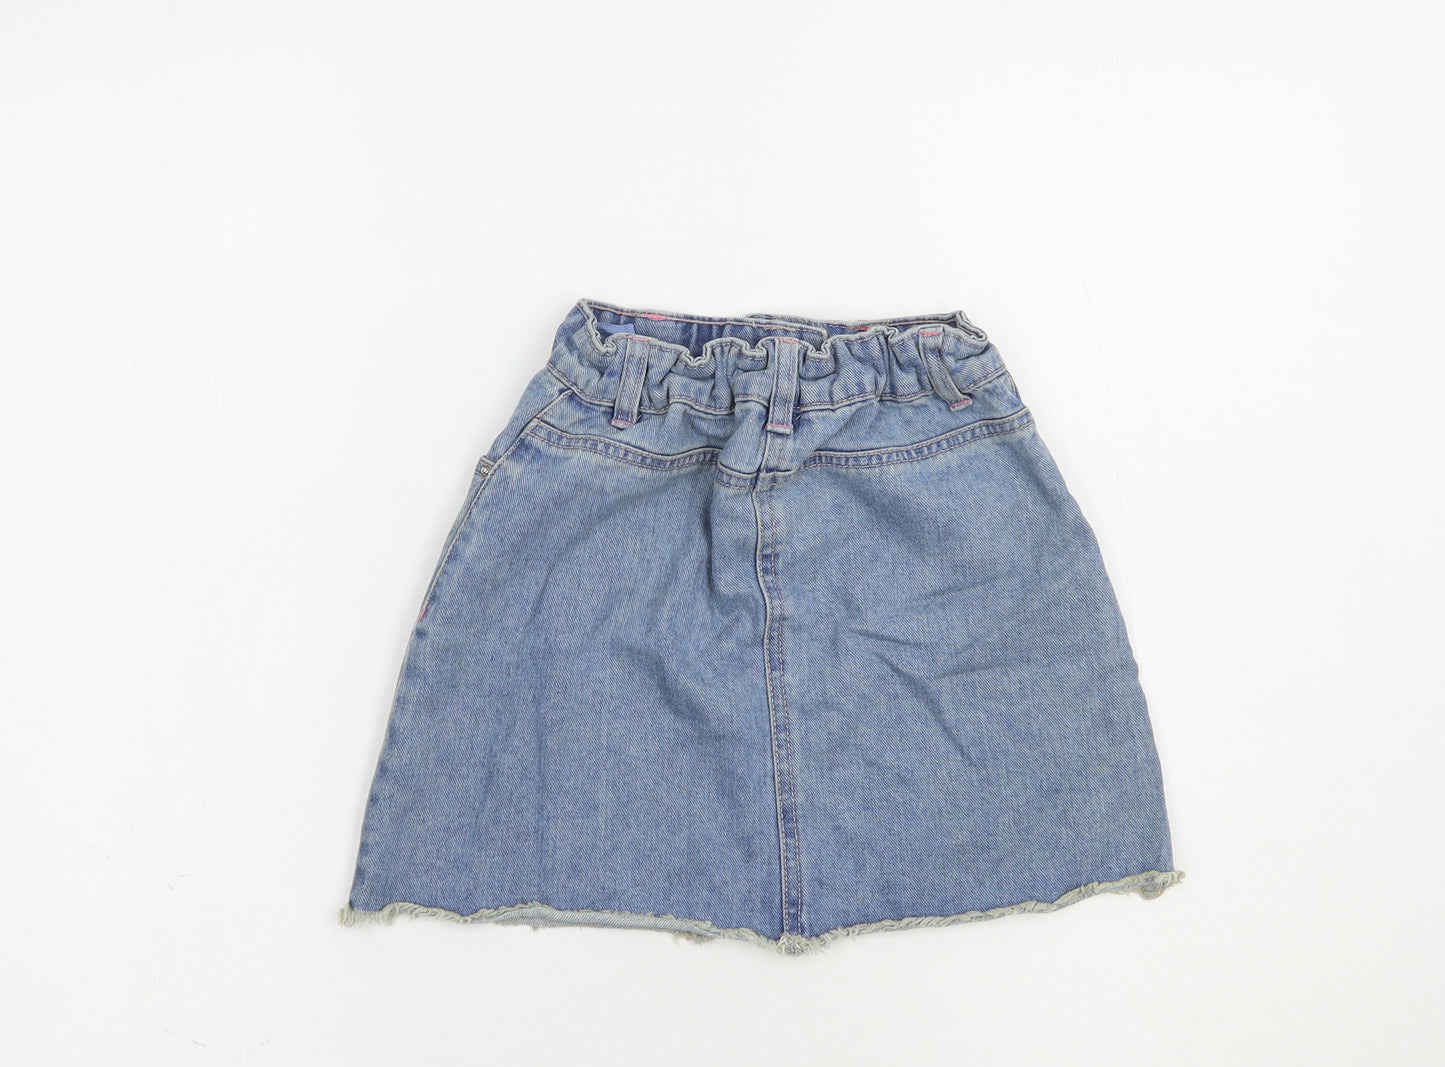 Matalan Girls Blue Floral Cotton Mini Skirt Size 9 Years  Regular Button